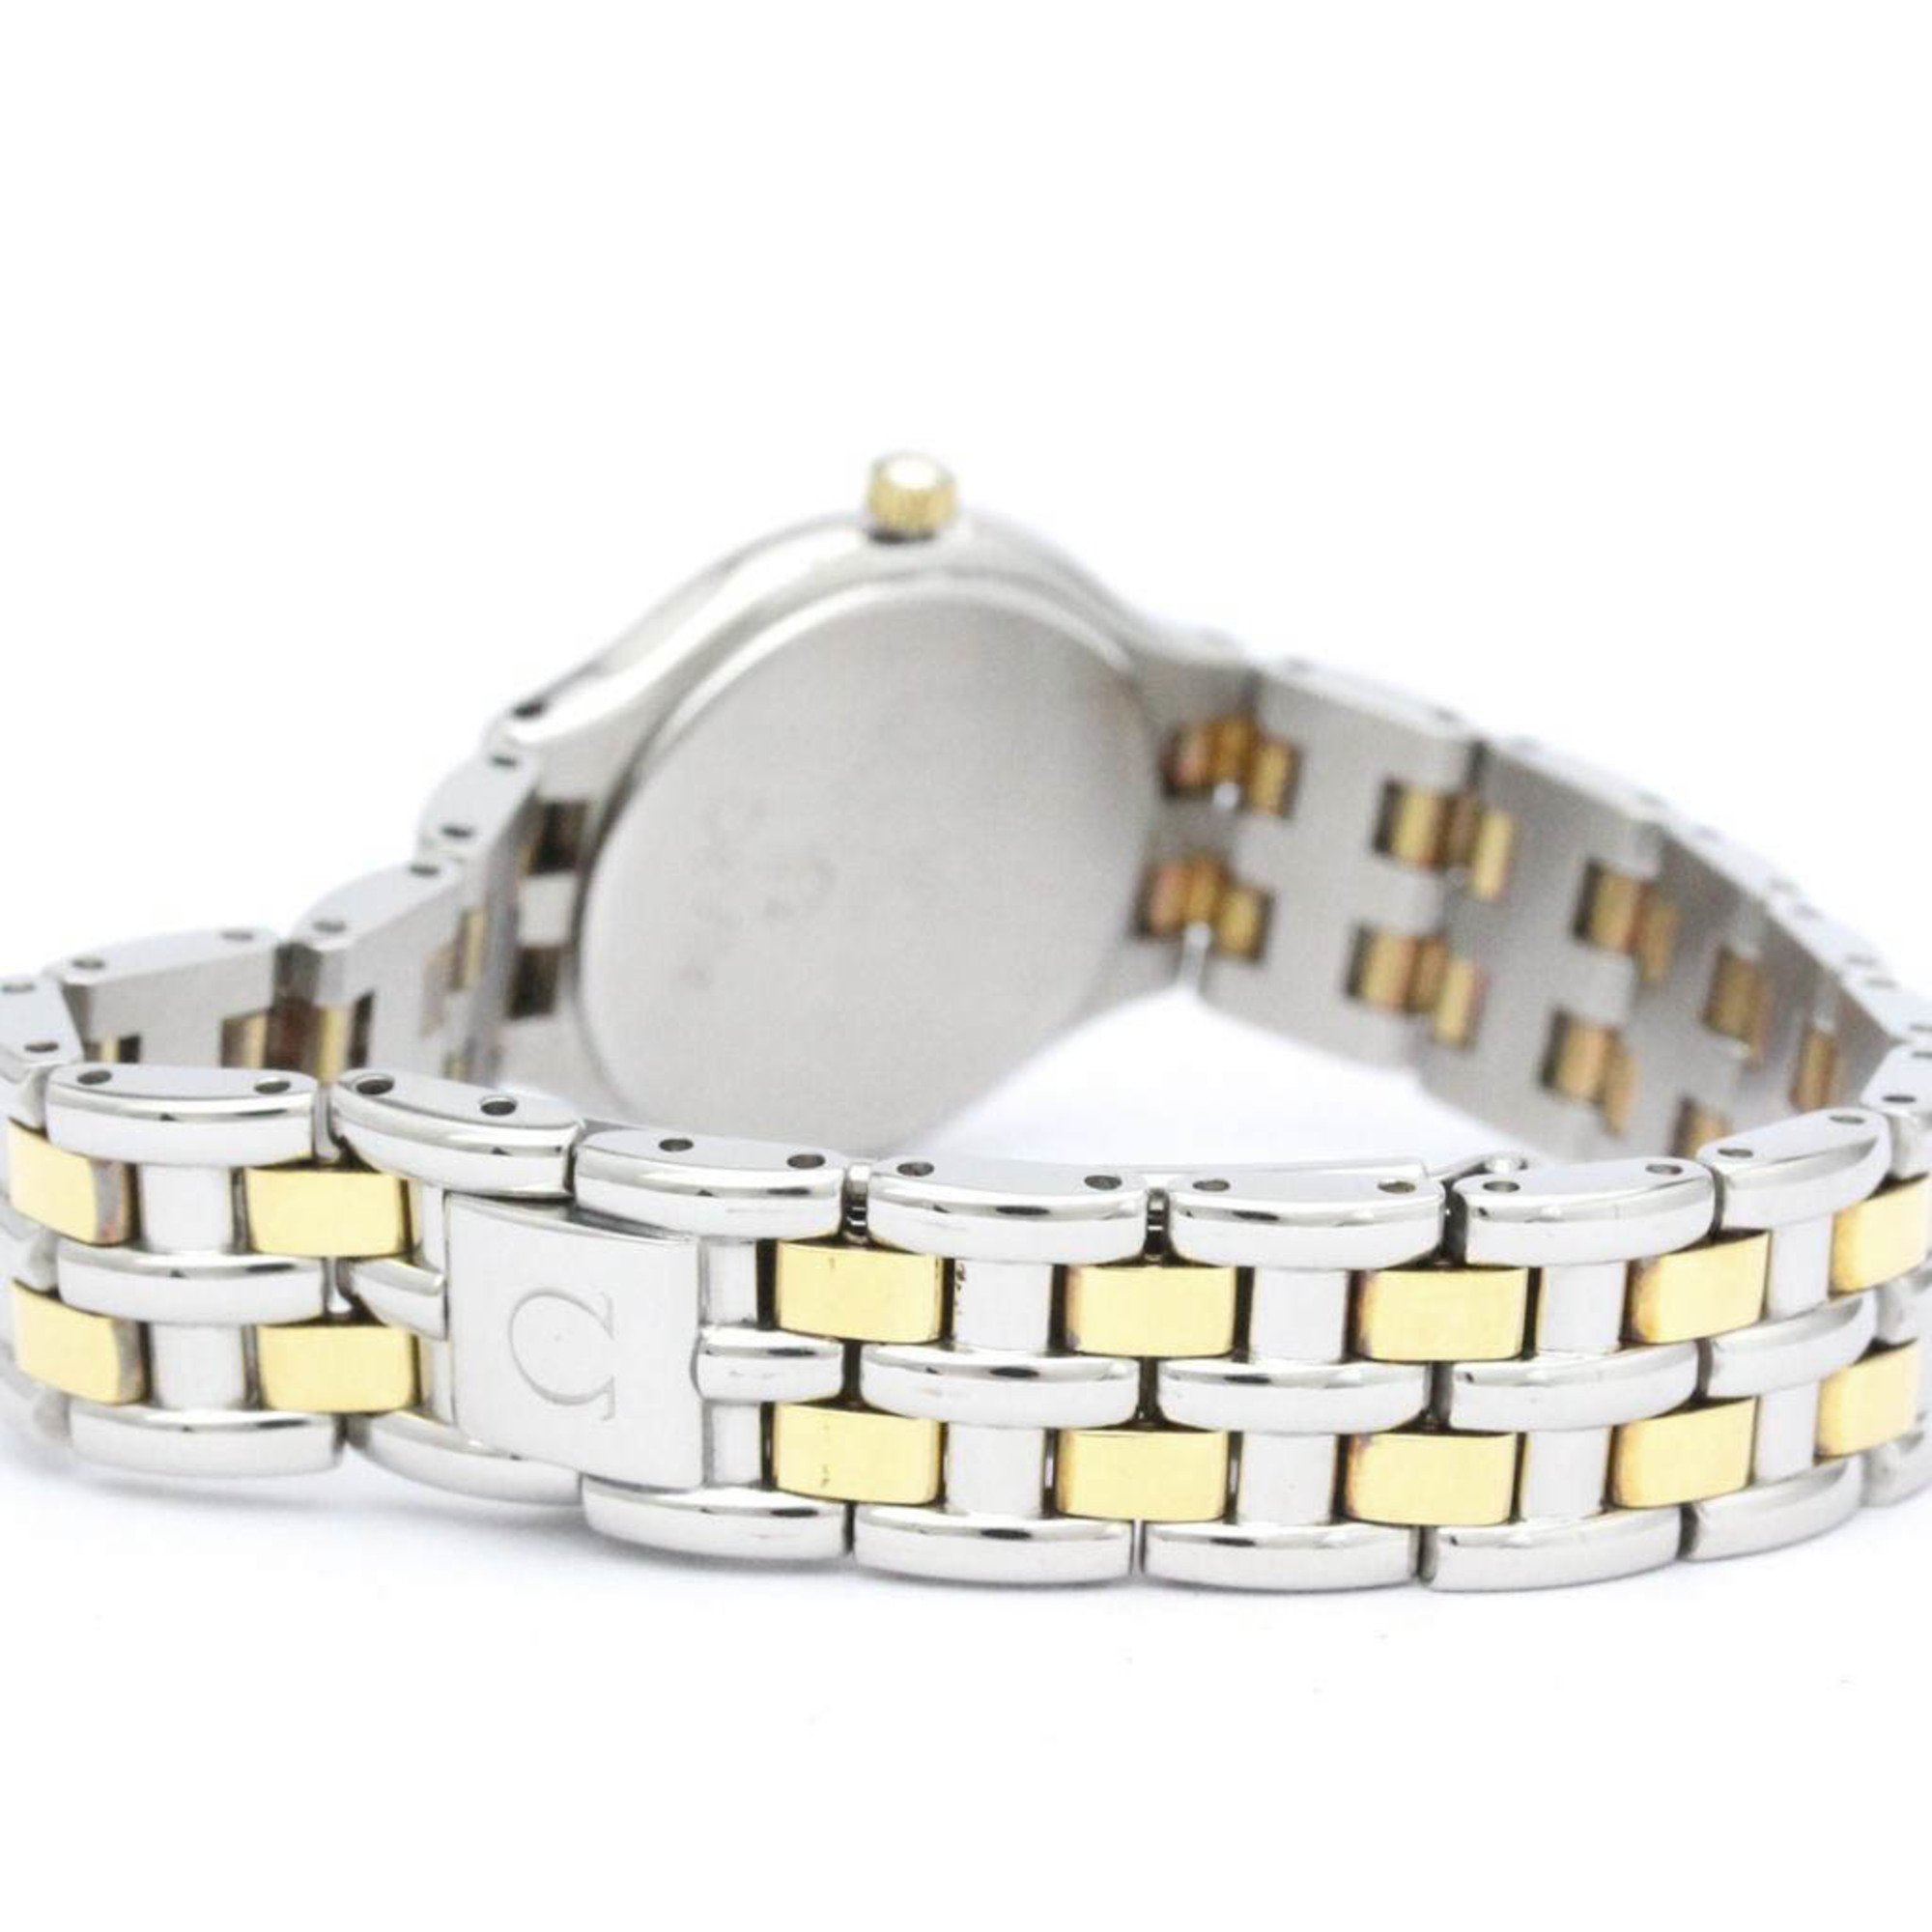 Polished OMEGA De Ville Symbol K18 Gold Stainless Steel Ladies Watch BF565456